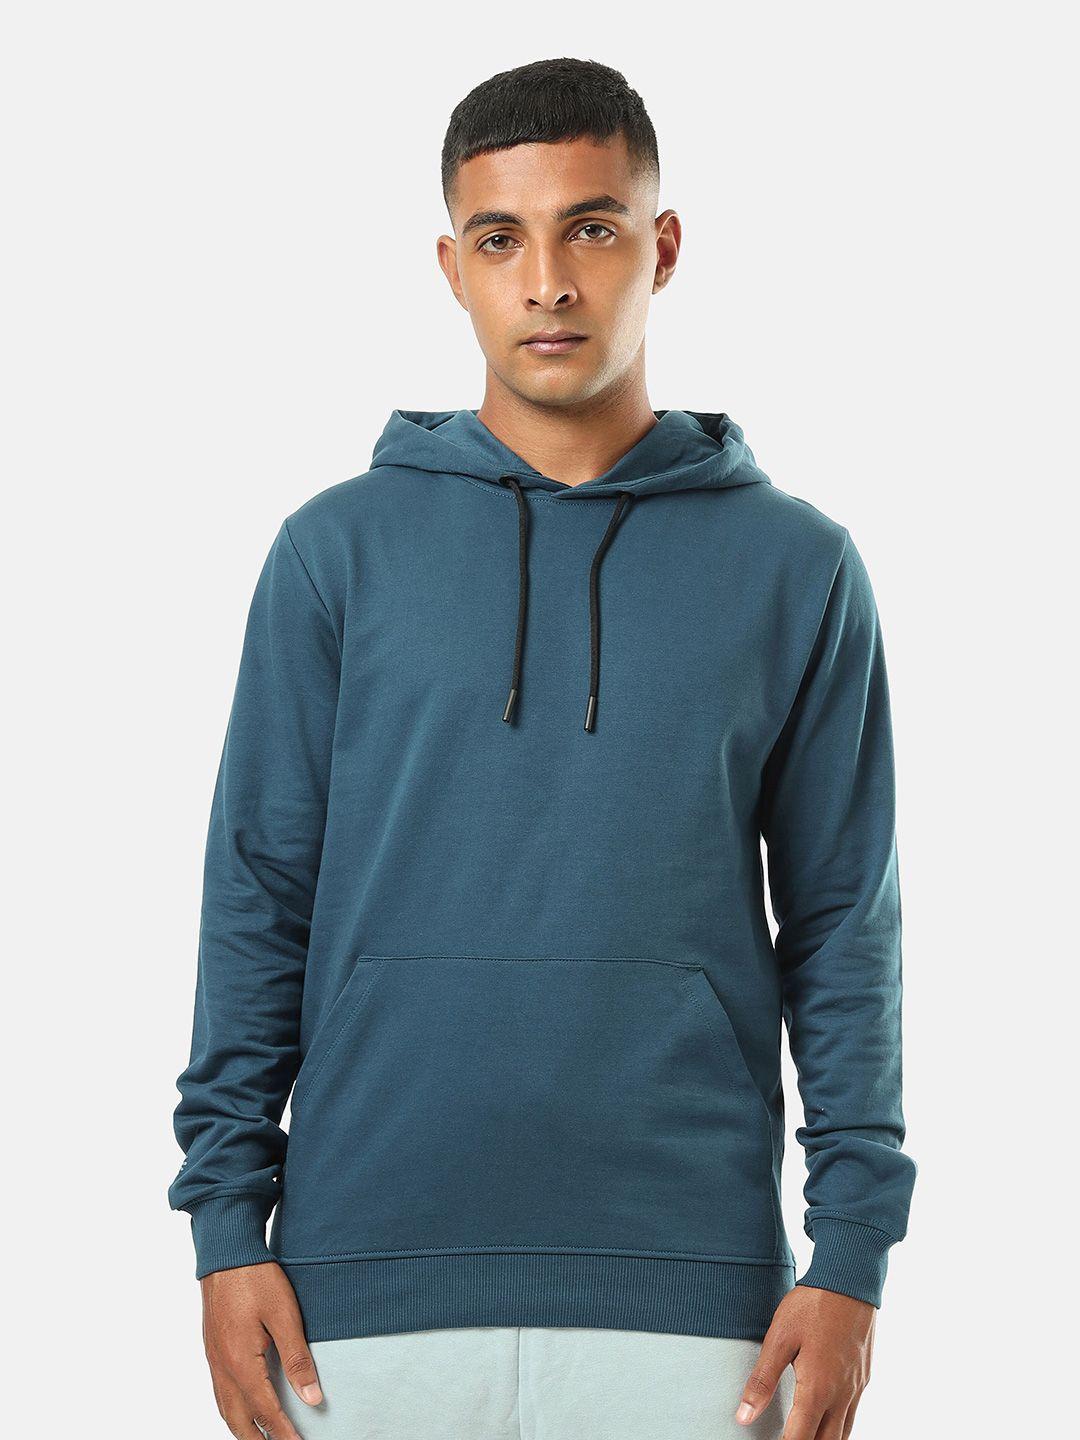 cultsport-hooded-sweatshirt